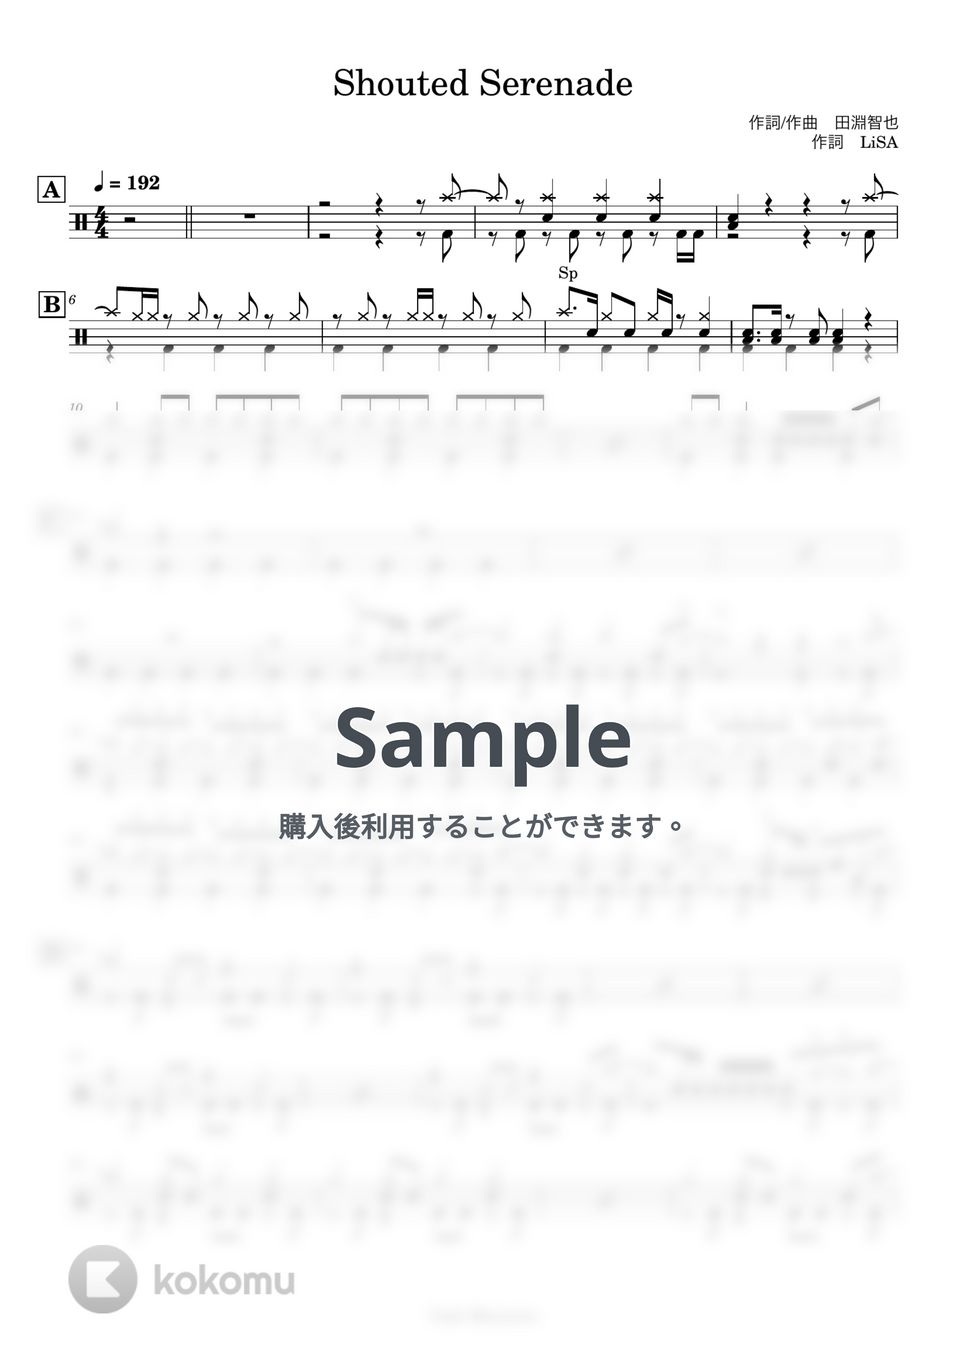 LiSA - 【ドラム譜】Shouted Serenade【完コピ】 (参考動画あり) by Taiki Mizumoto